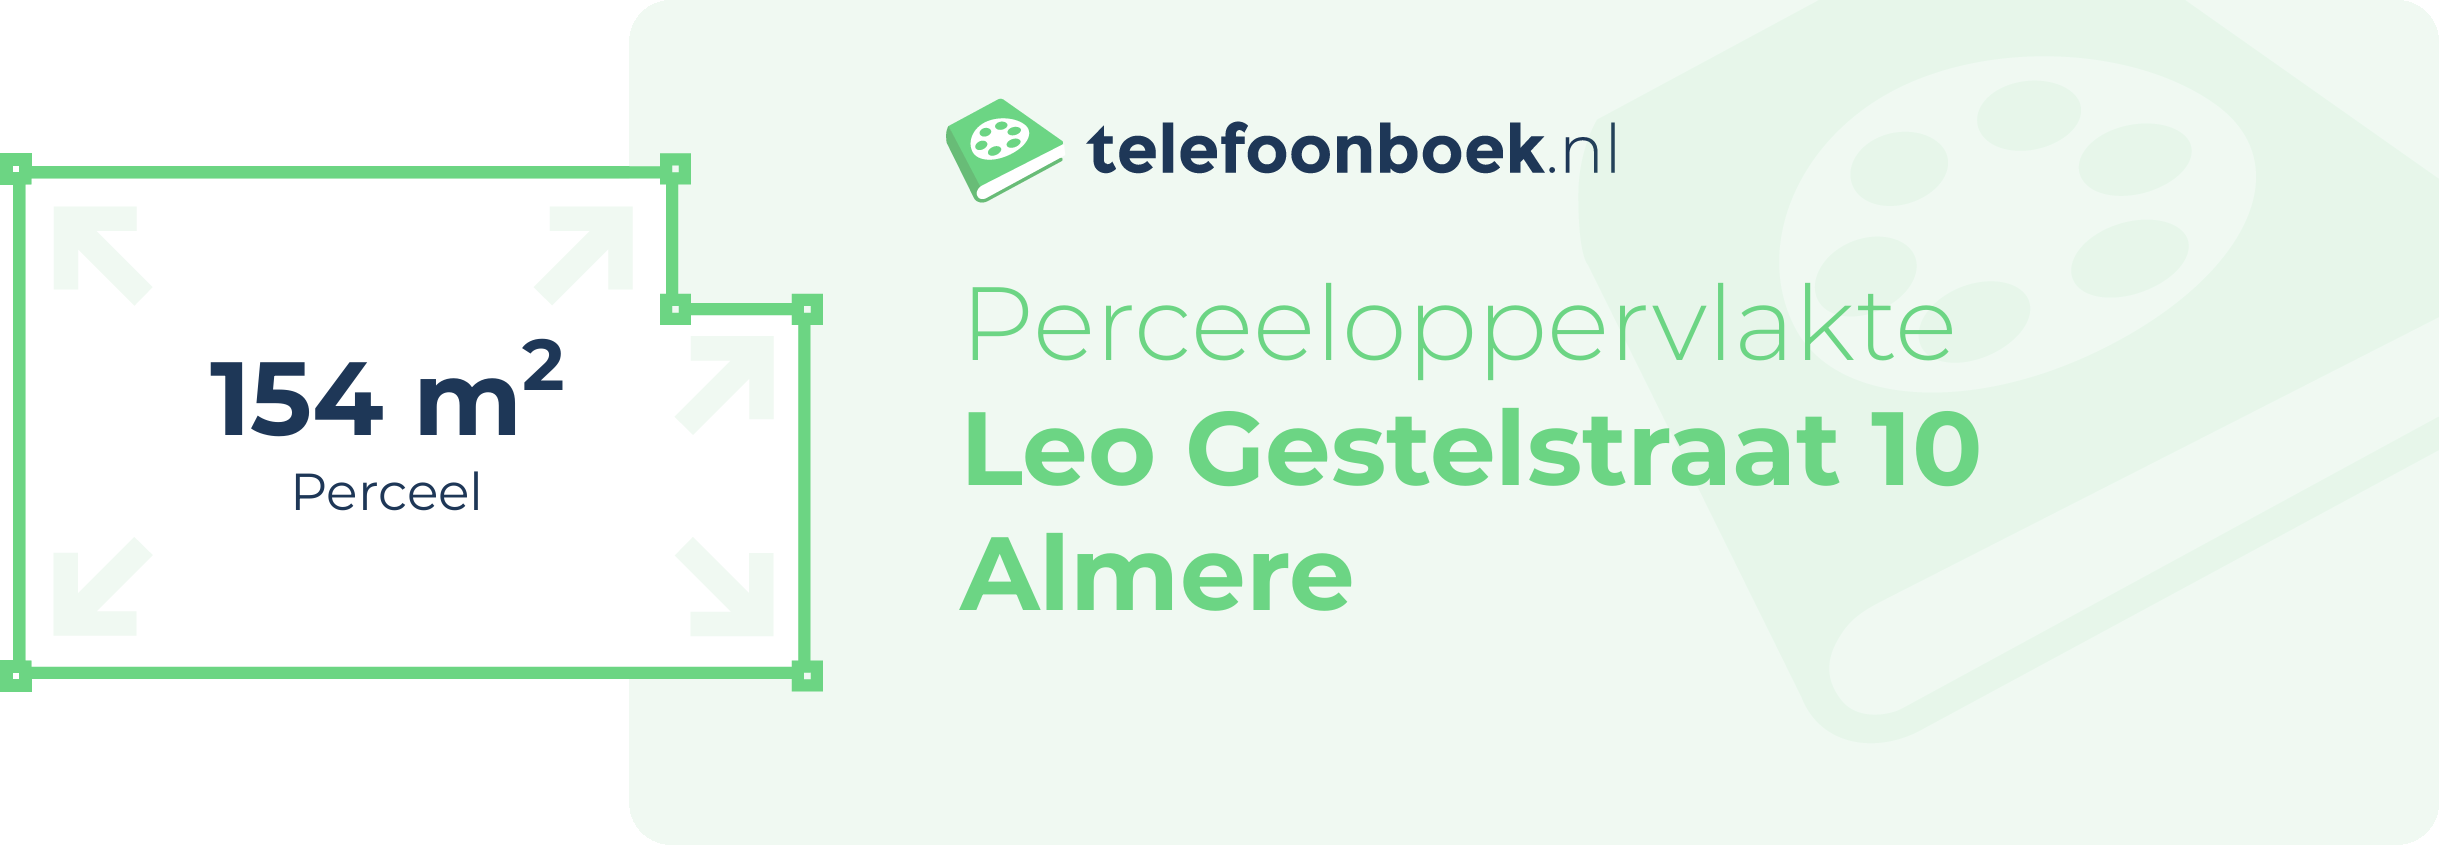 Perceeloppervlakte Leo Gestelstraat 10 Almere